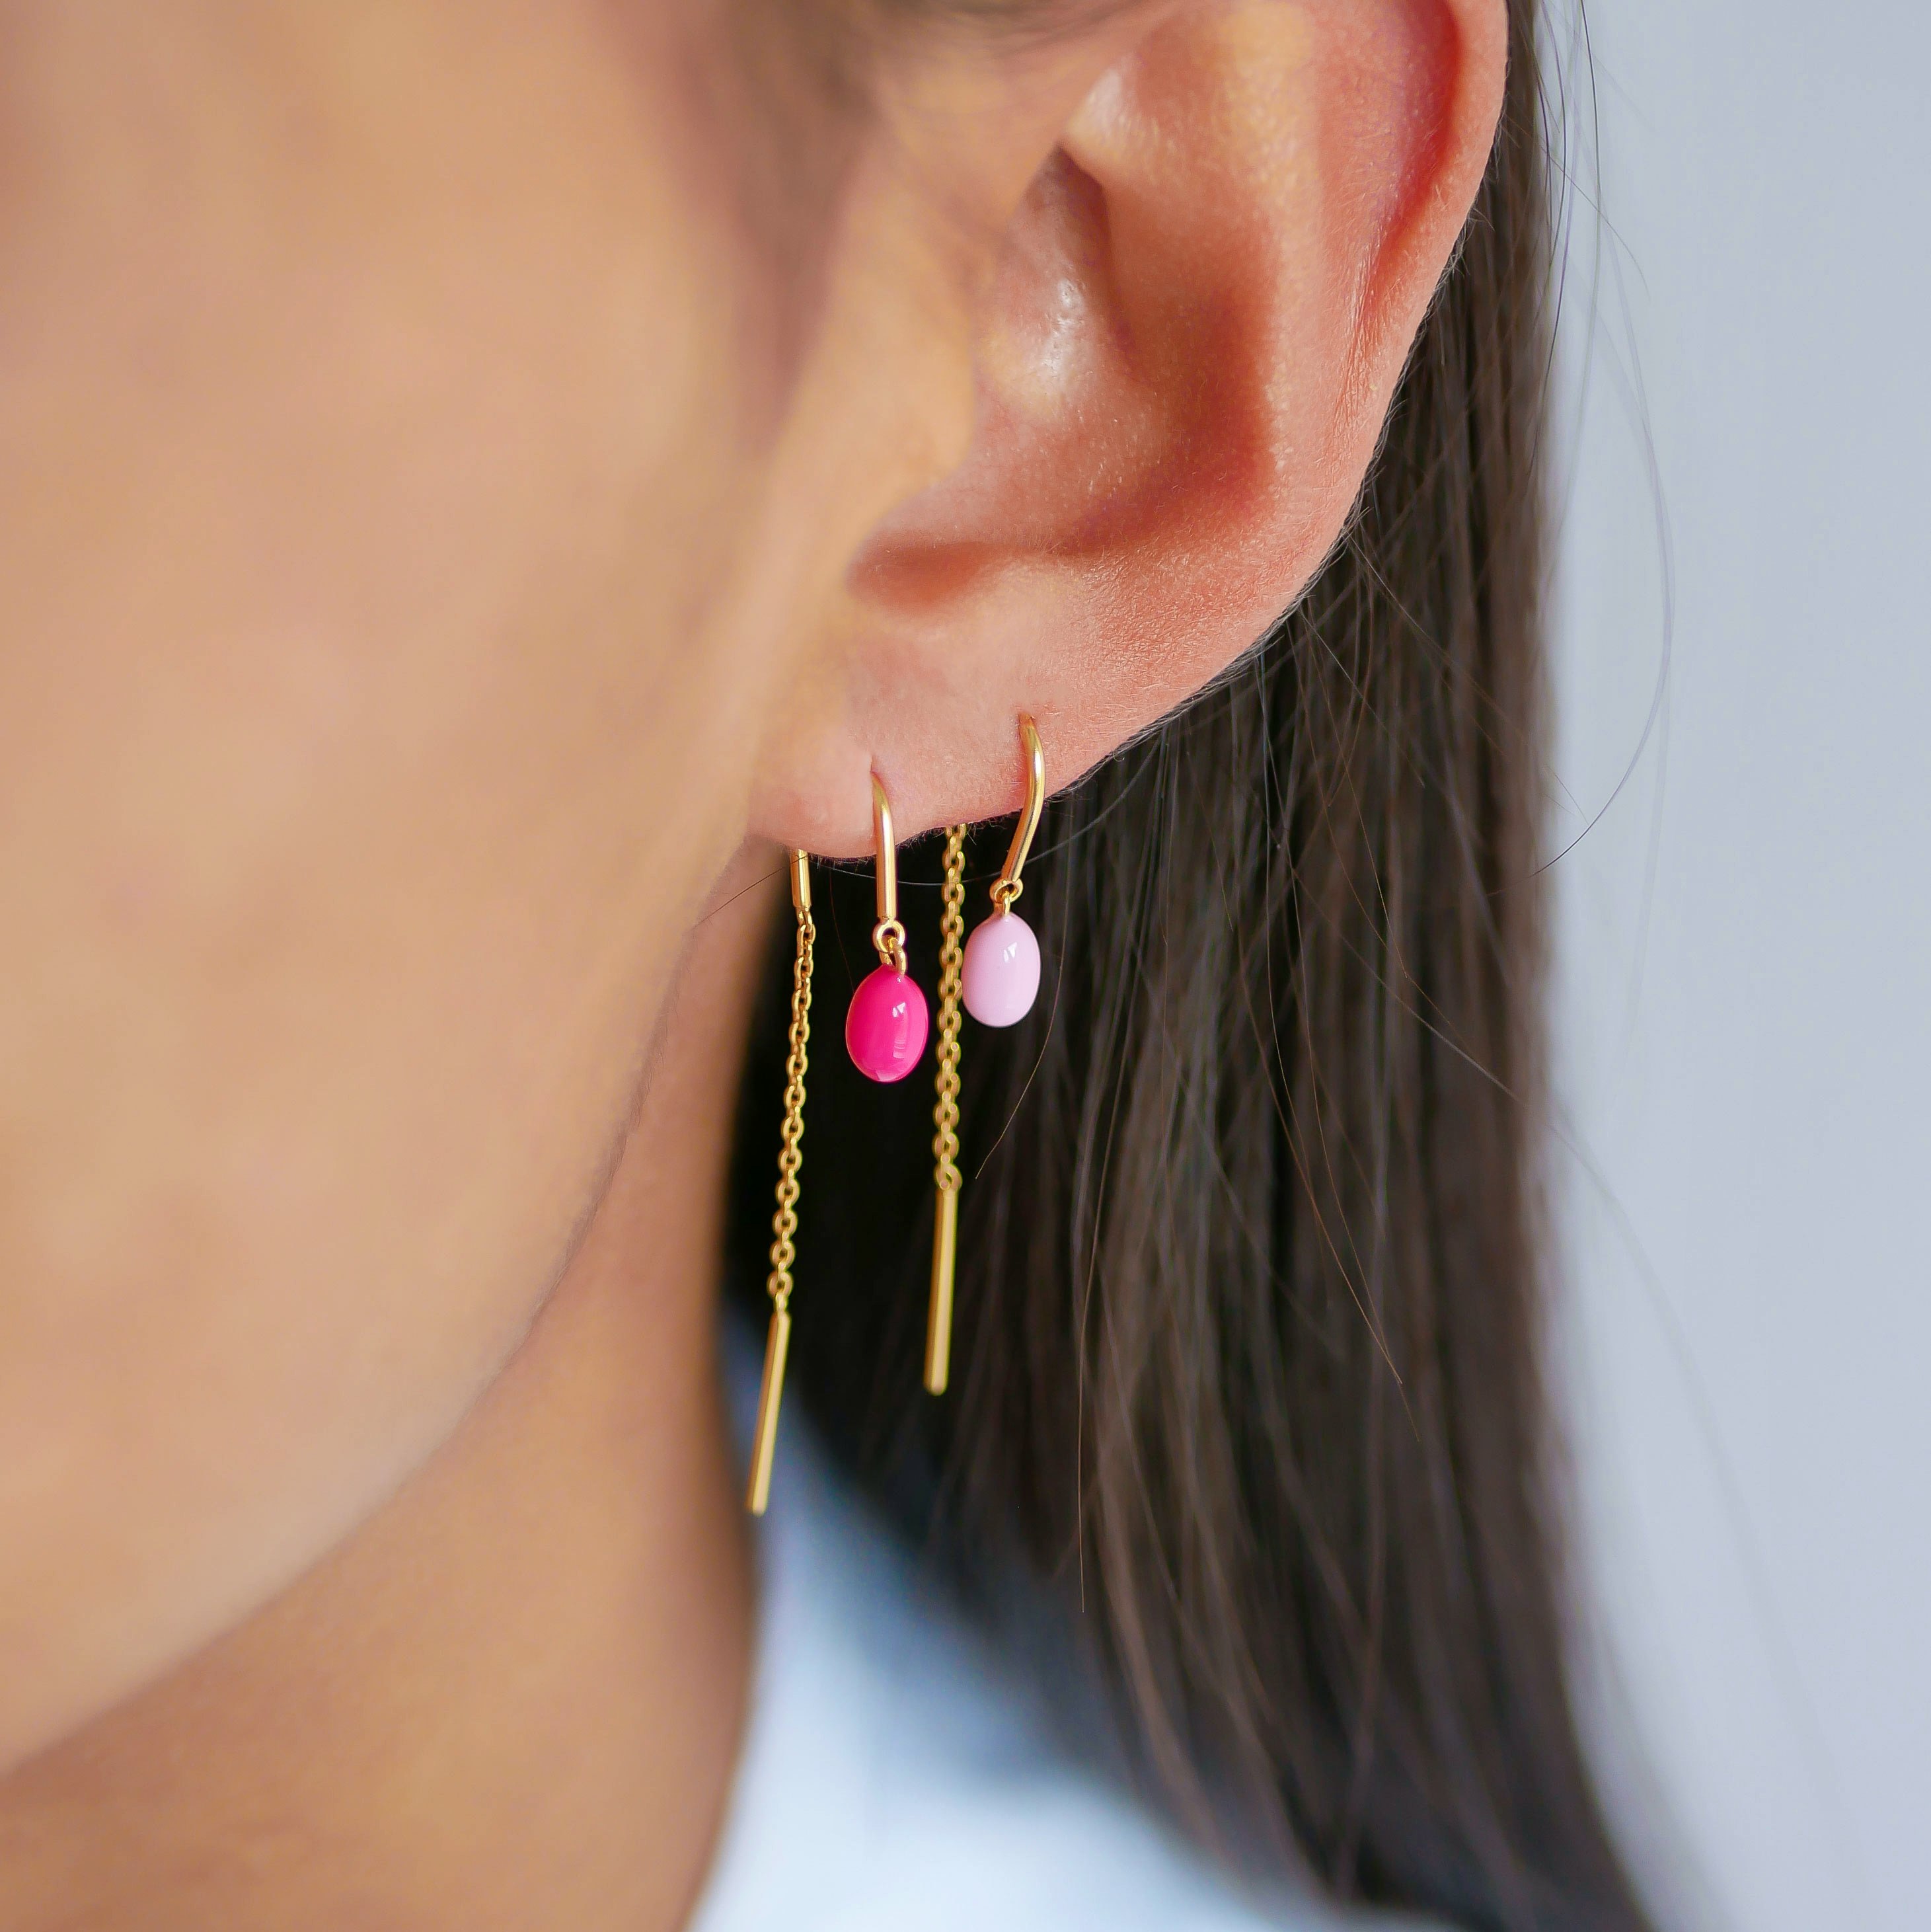 Eleanor Earrings Light Pink von Enamel Copenhagen in Vergoldet-Silber Sterling 925